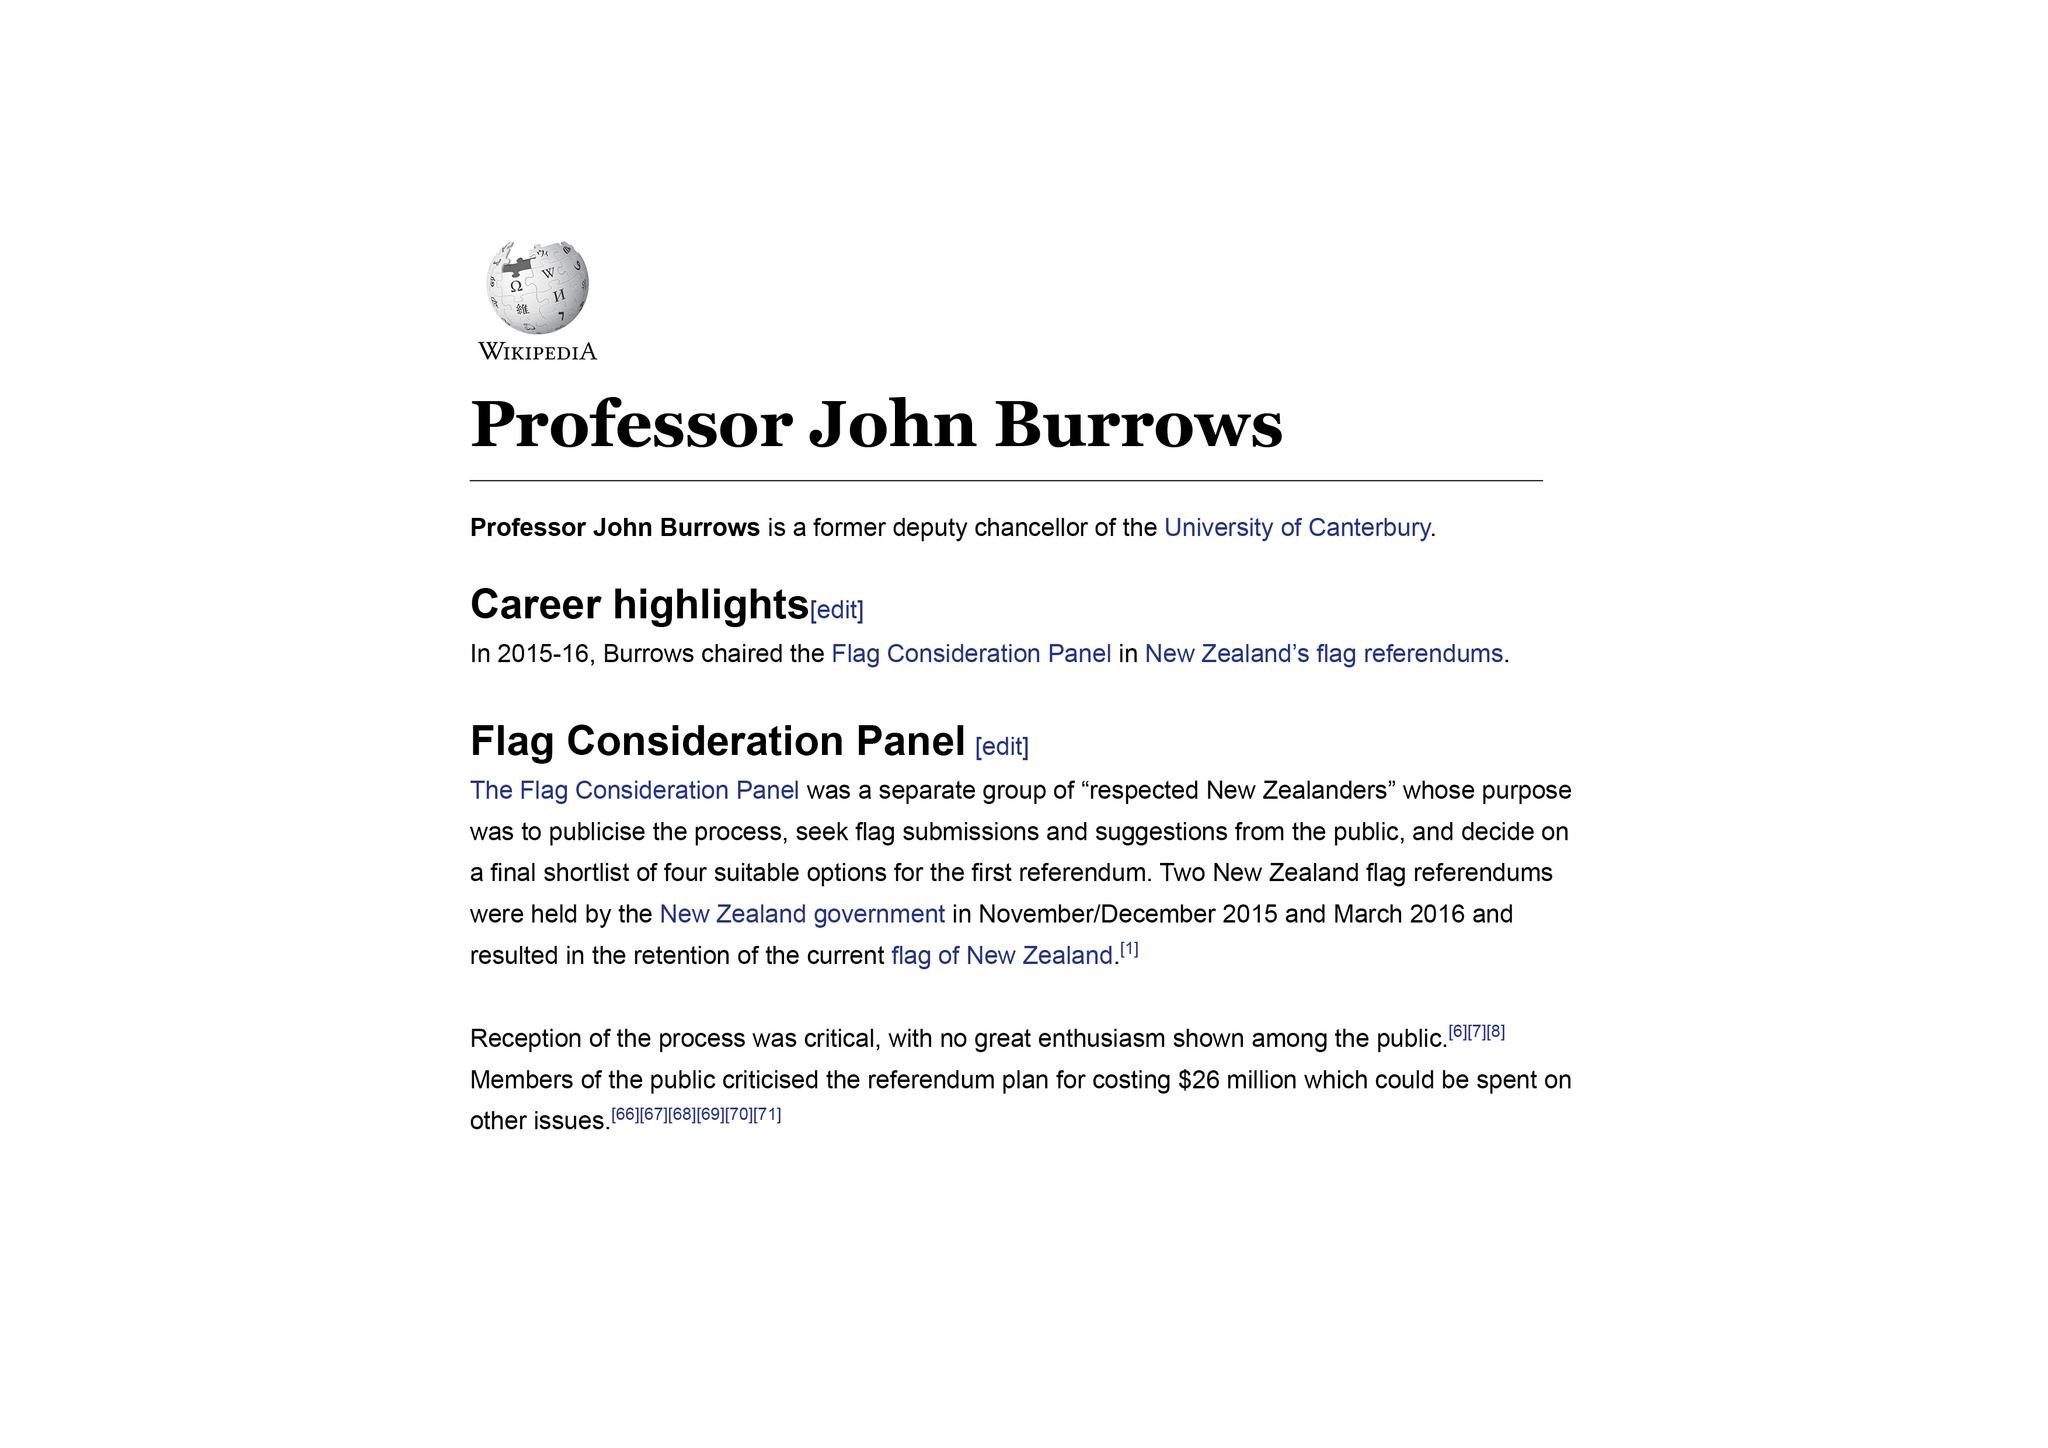 THAT TIME PROFESSOR JOHN BURROWS DIDNT 